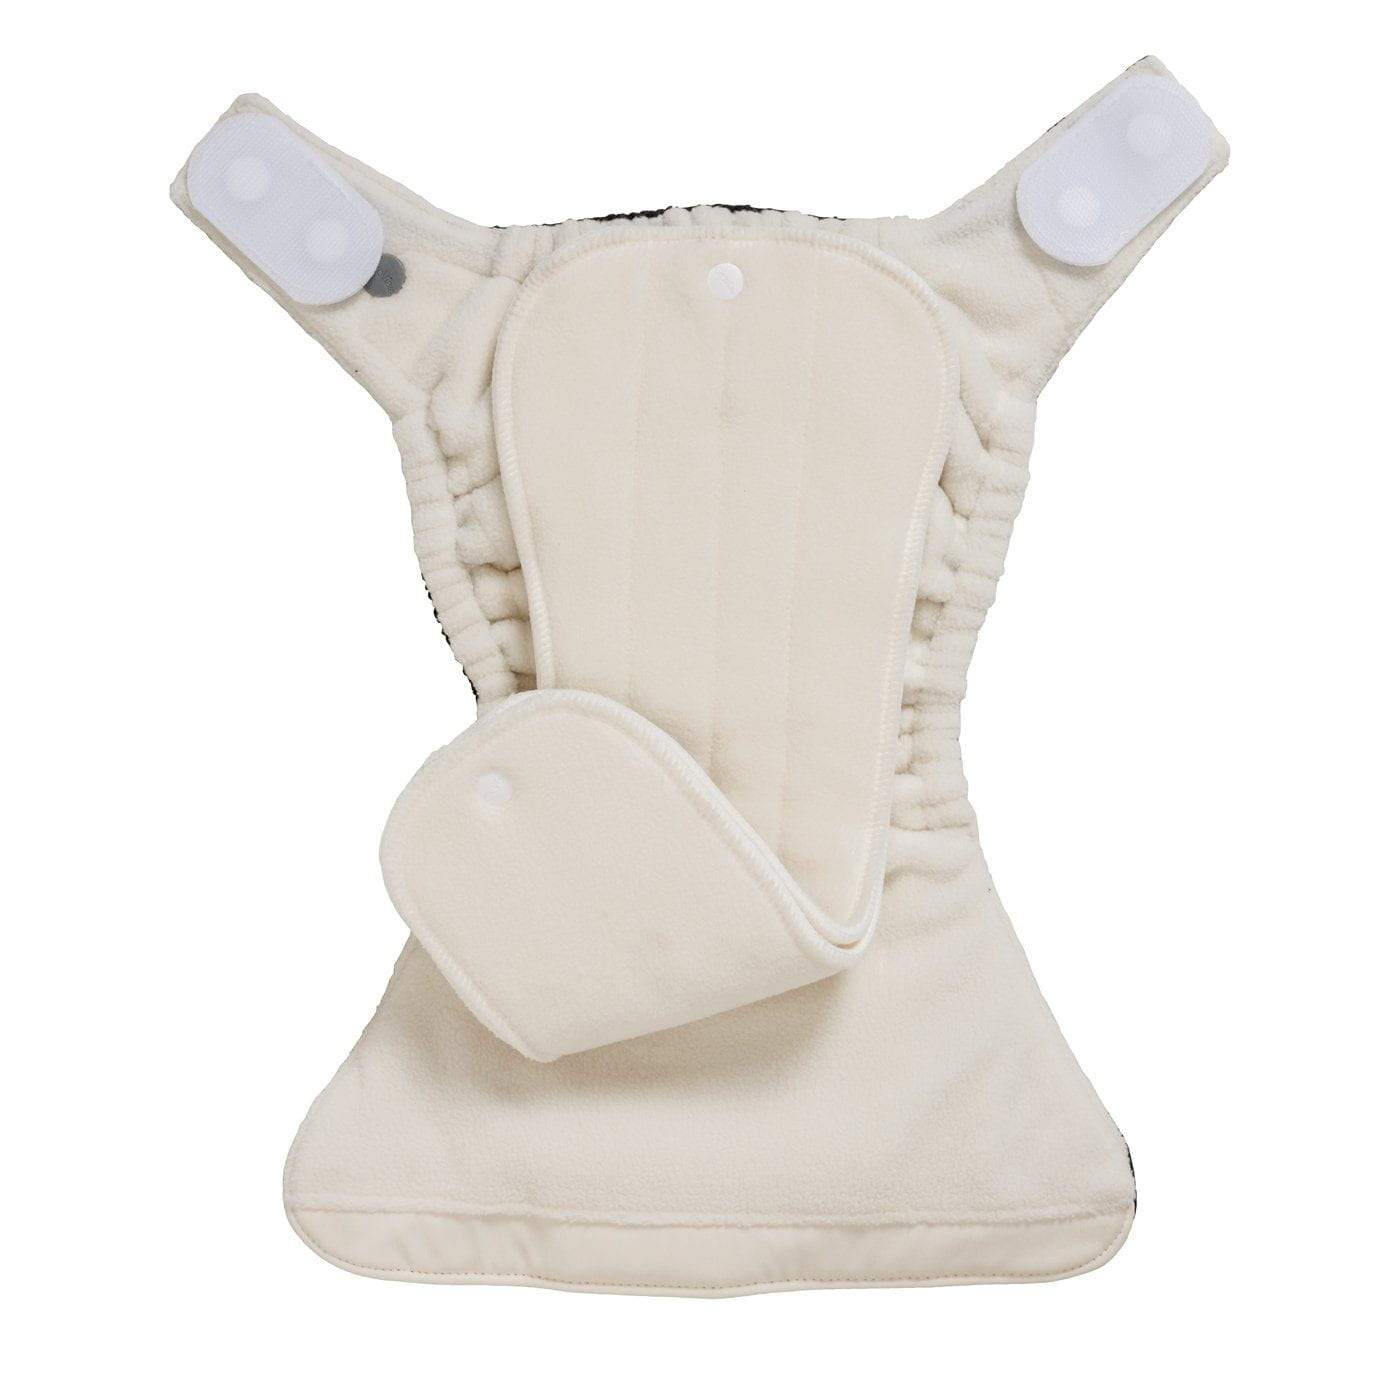 Second Quality: Buttah Big O.N.E. Cloth Diaper - Celie